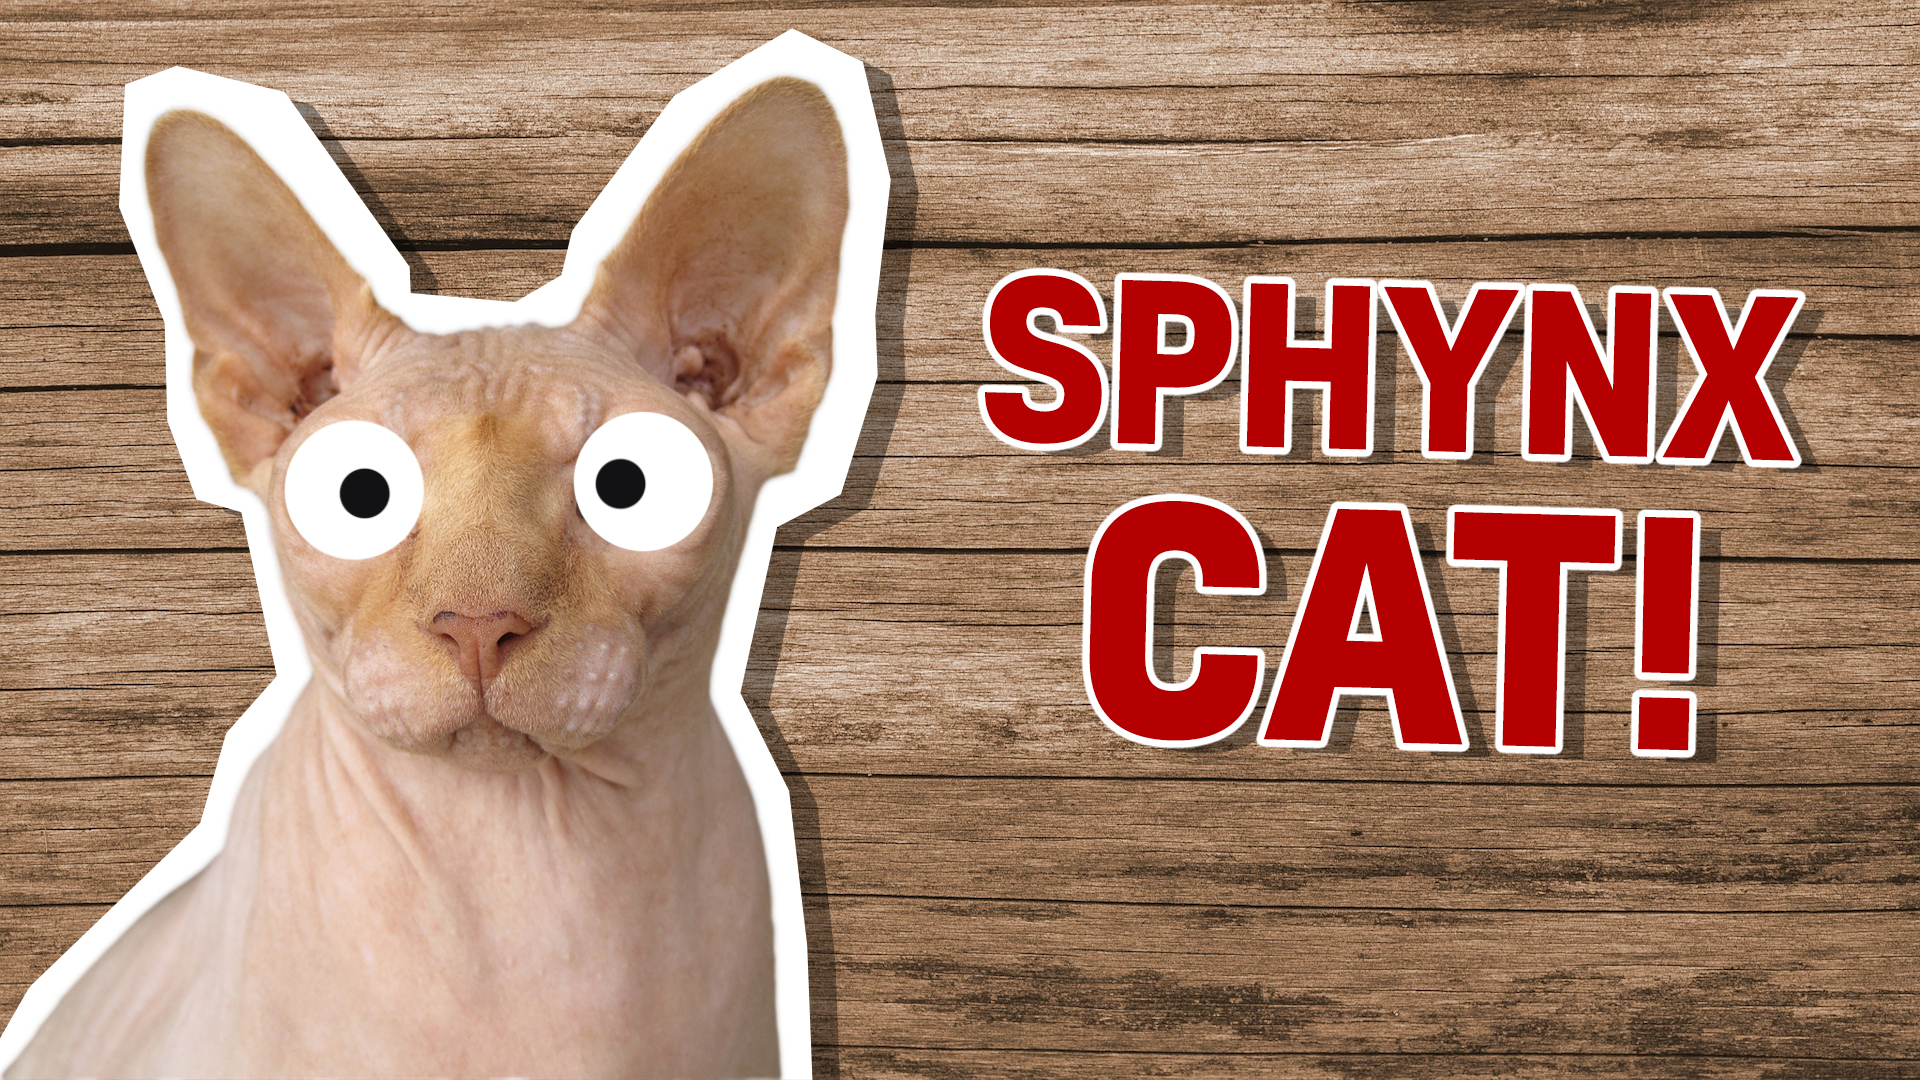 Sphynx cat